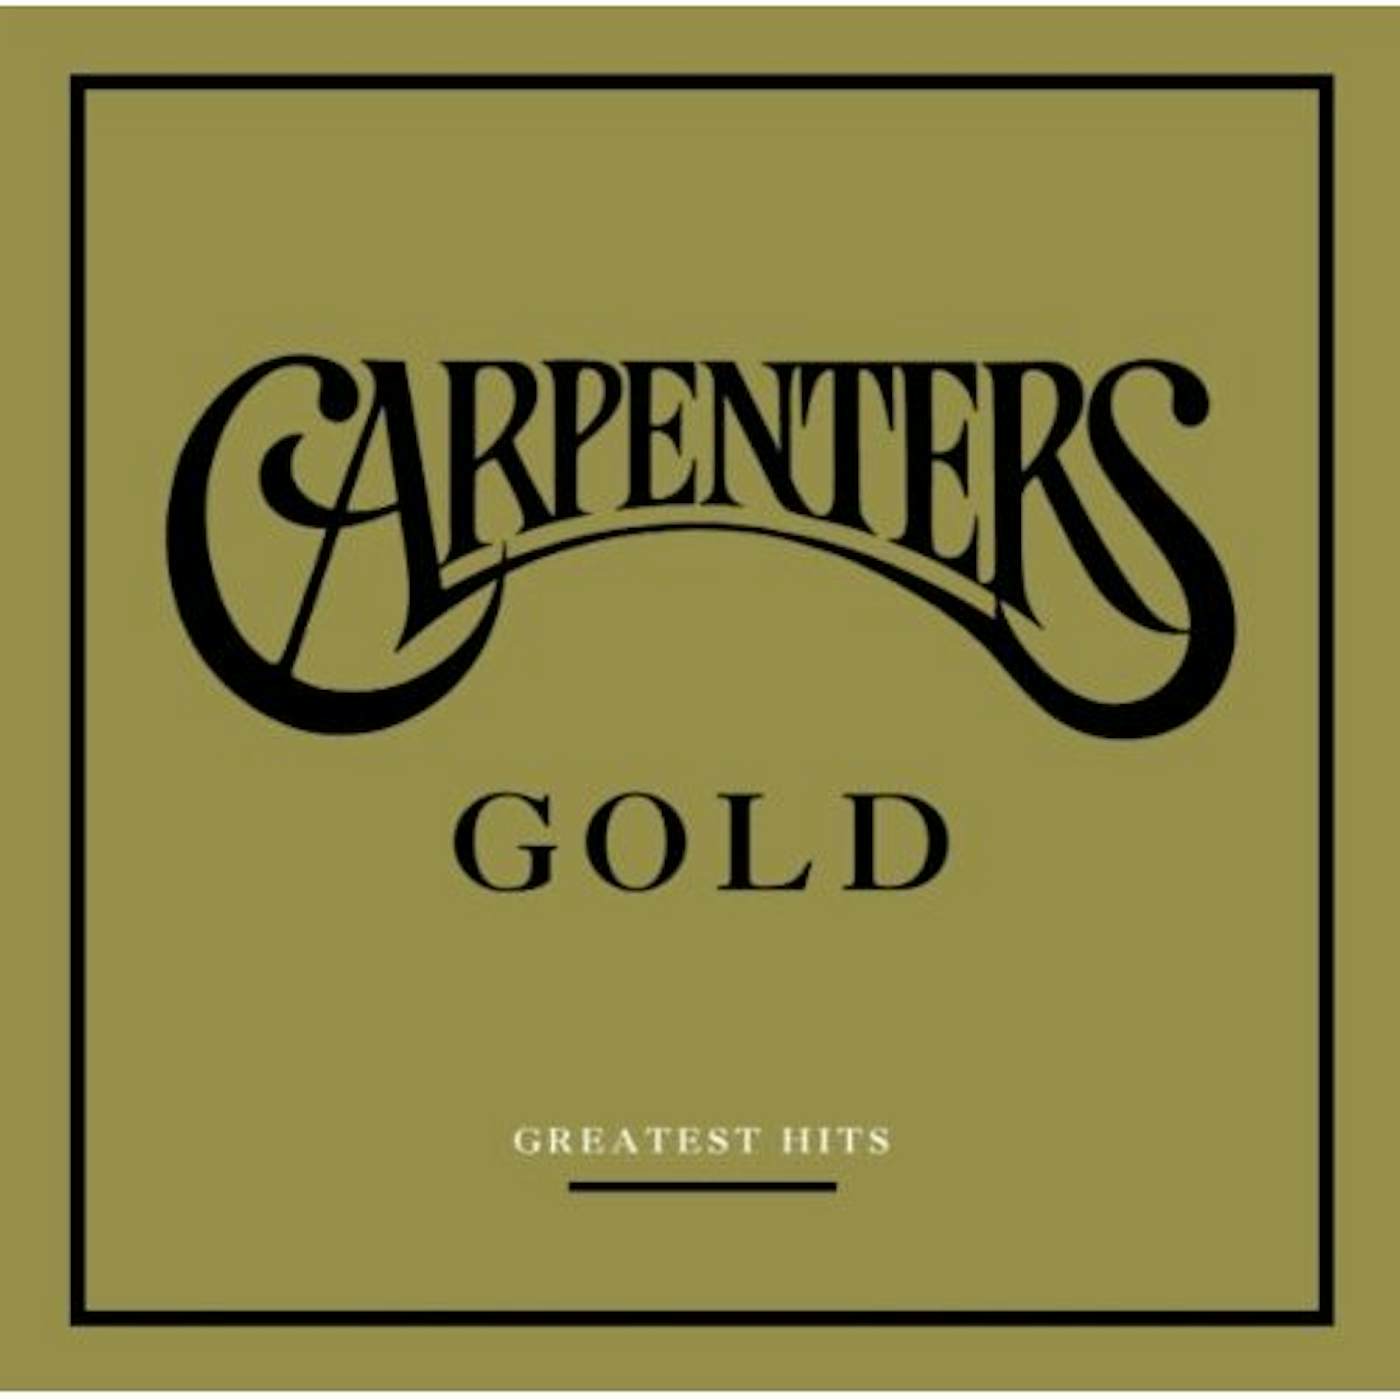 CARPENTERS GOLD CD